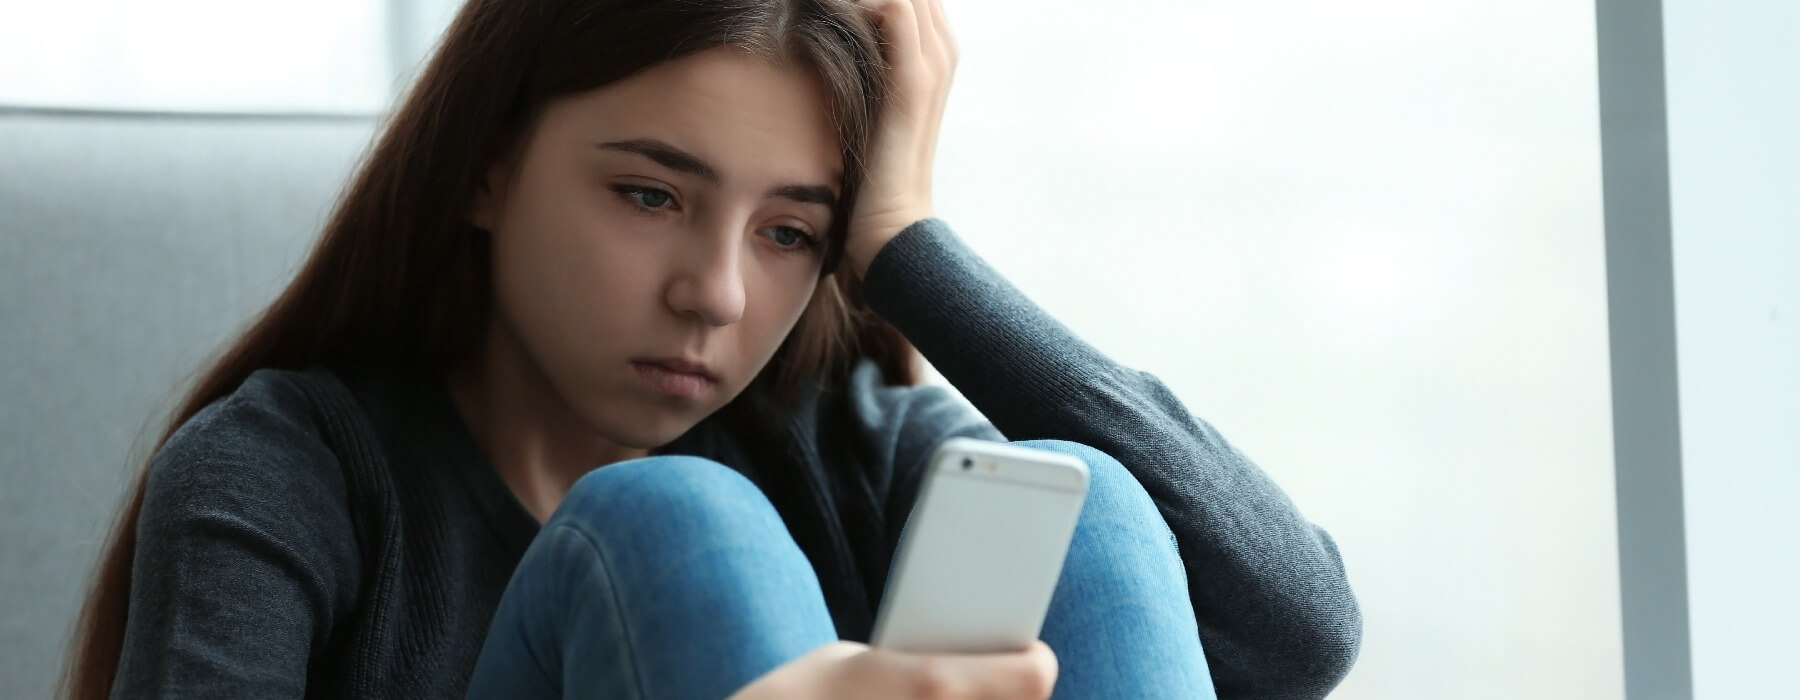 sad teen girl with cellphone